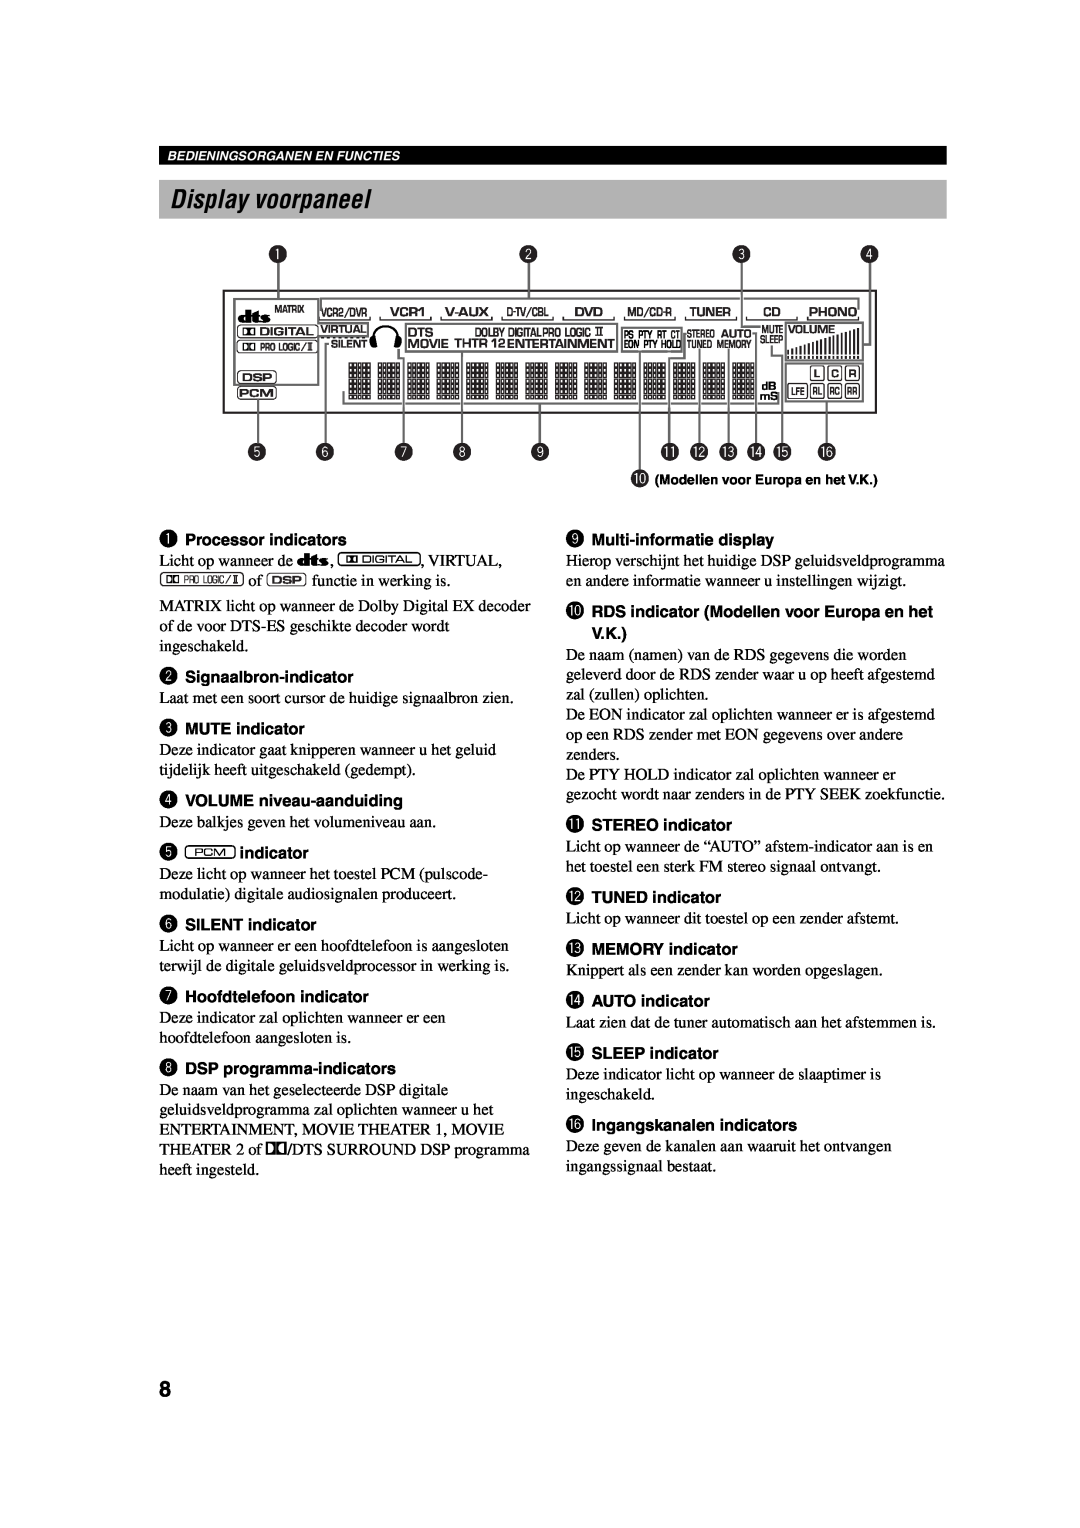 Yamaha RX-V730RDS Display voorpaneel, q w e r t y, Processor indicators, Multi-informatiedisplay, 2Signaalbron-indicator 